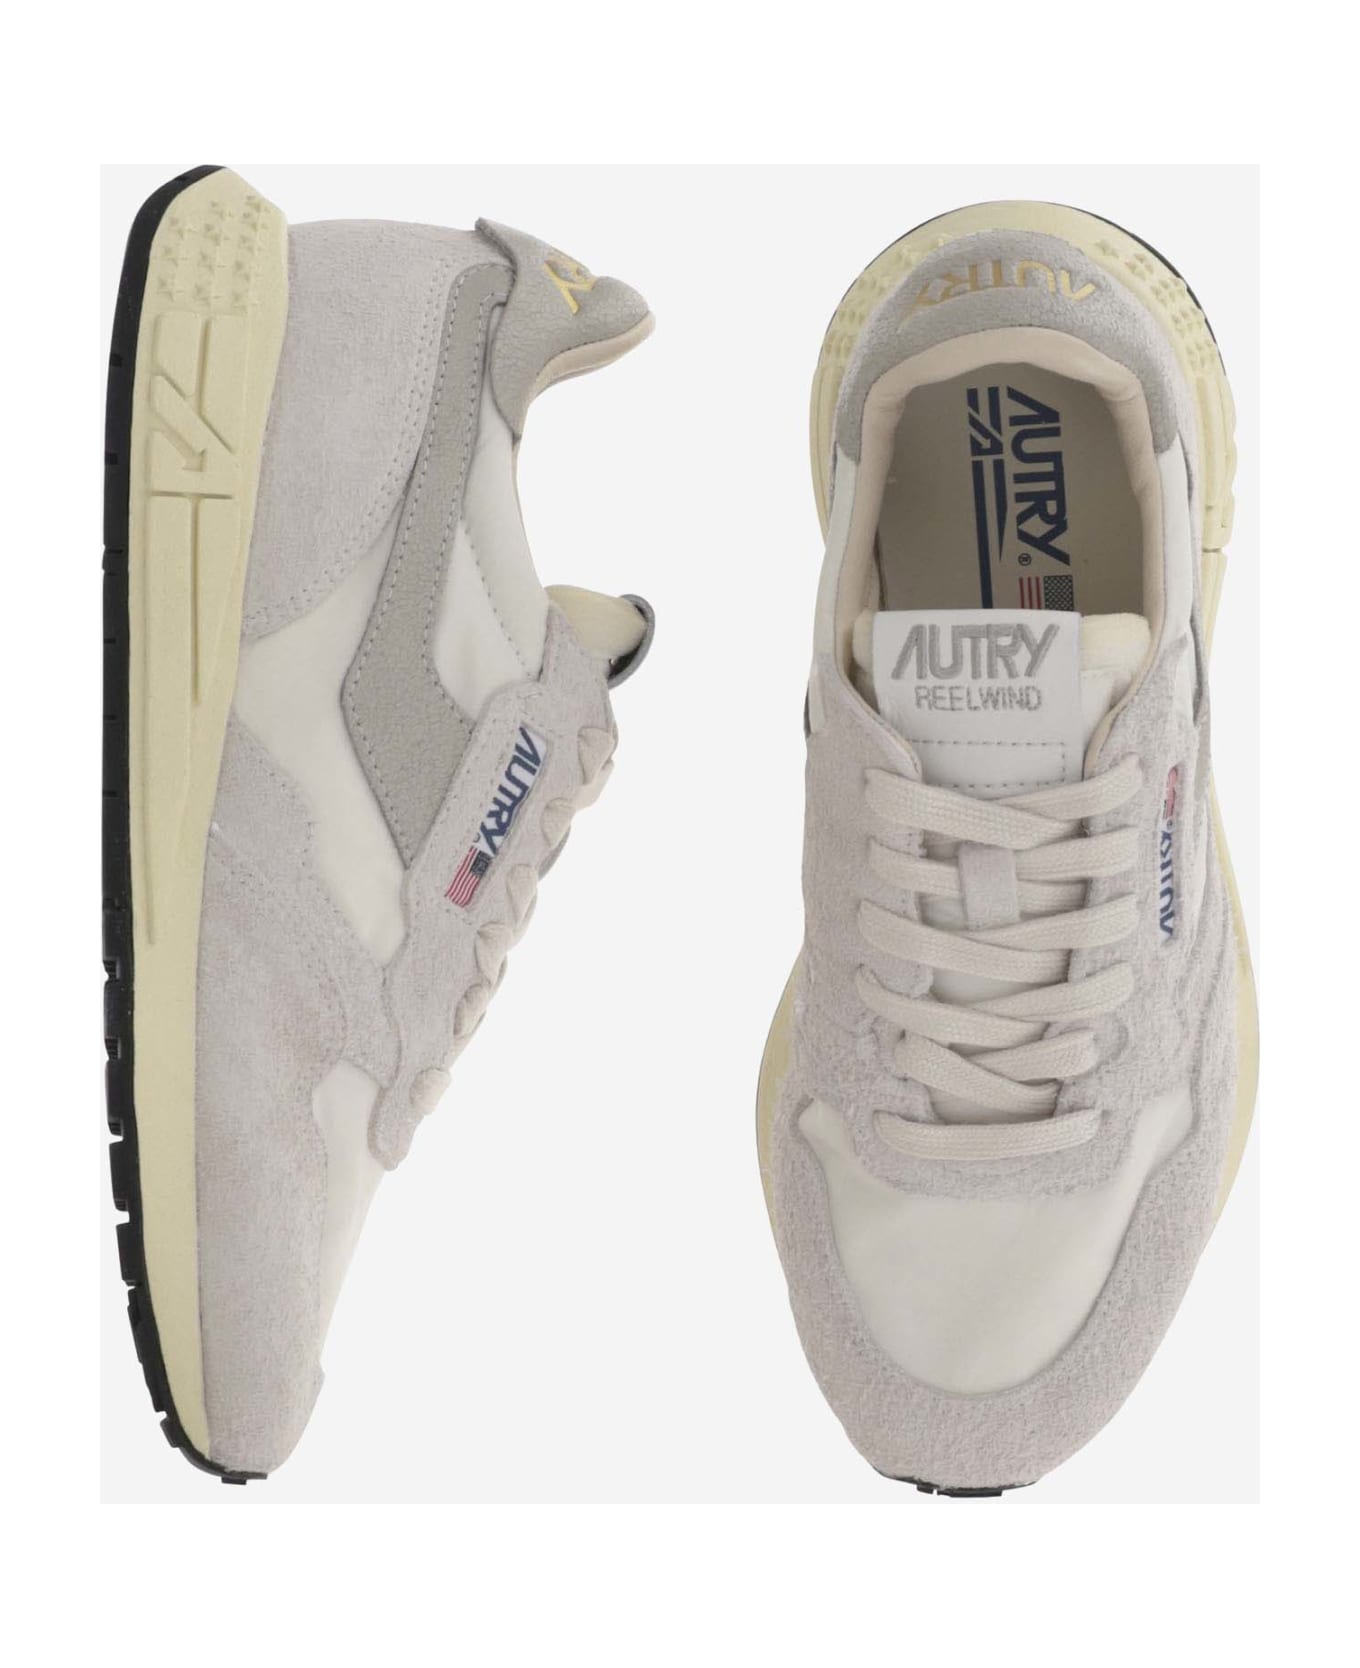 Autry Reelwind Sneakers - Bianco/Nero